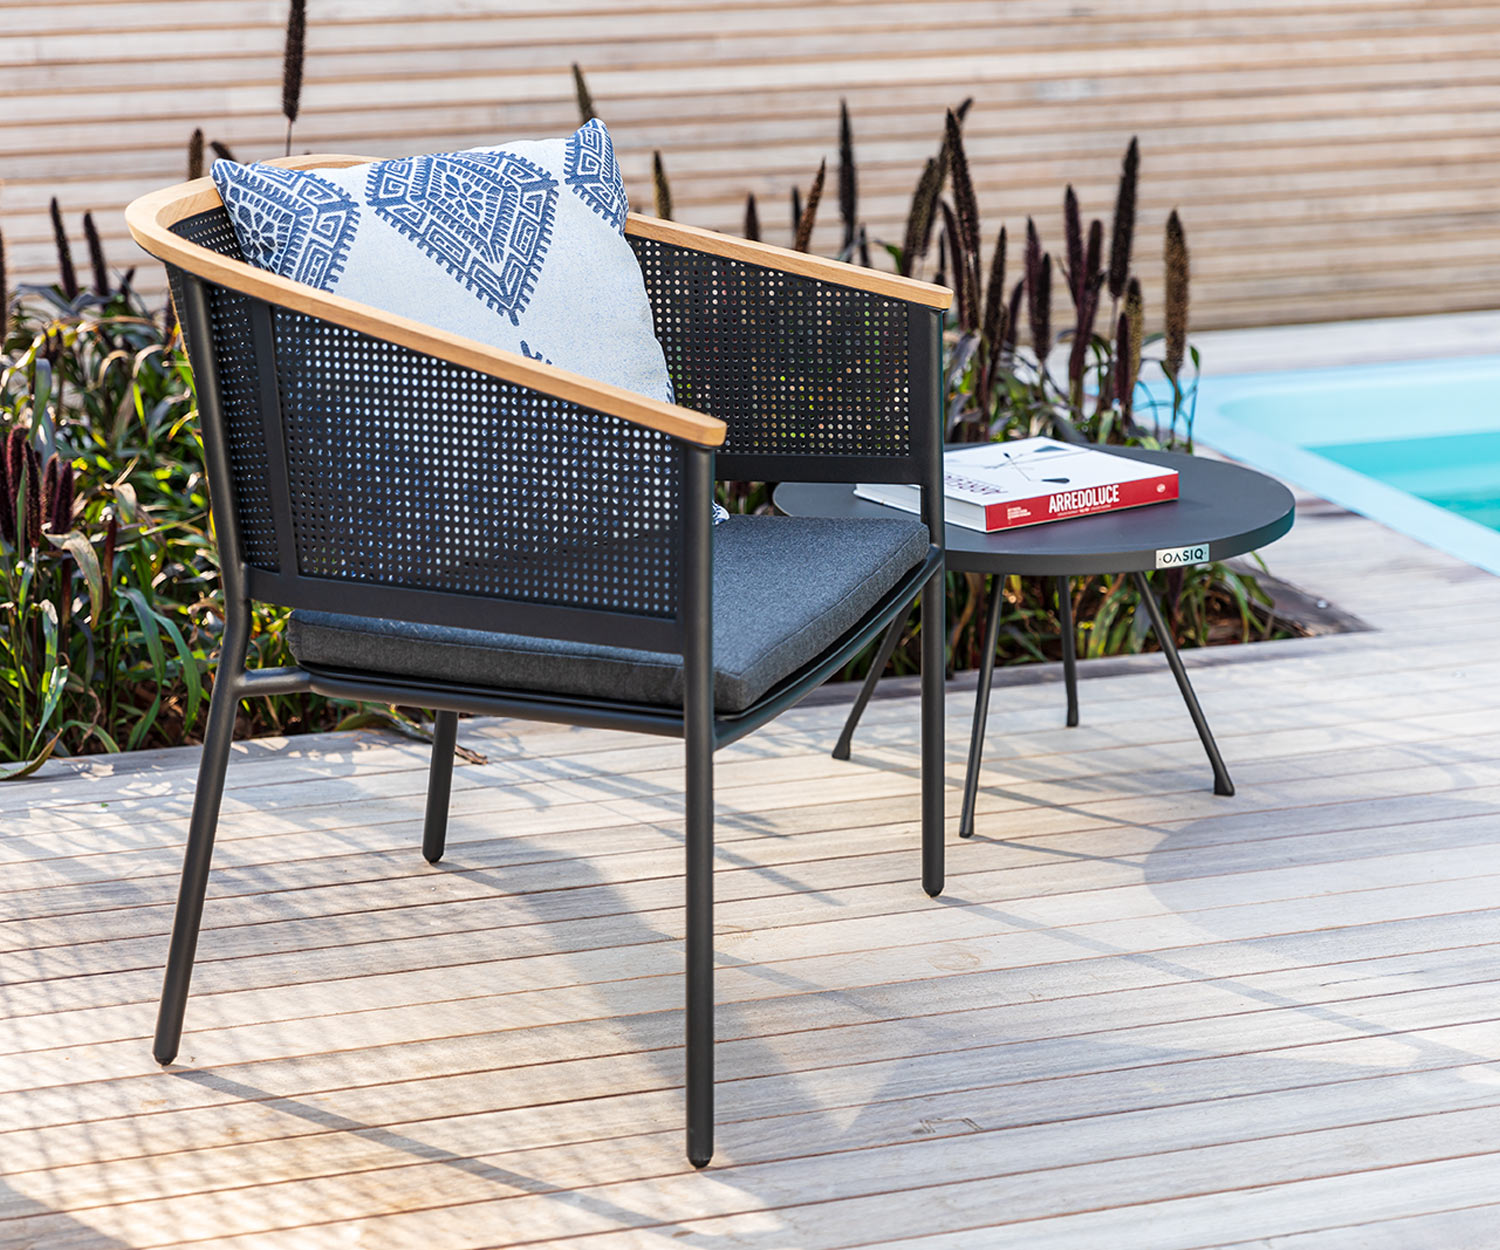 Weatherproof Oasiq Riad design lounge chair anthracite frame